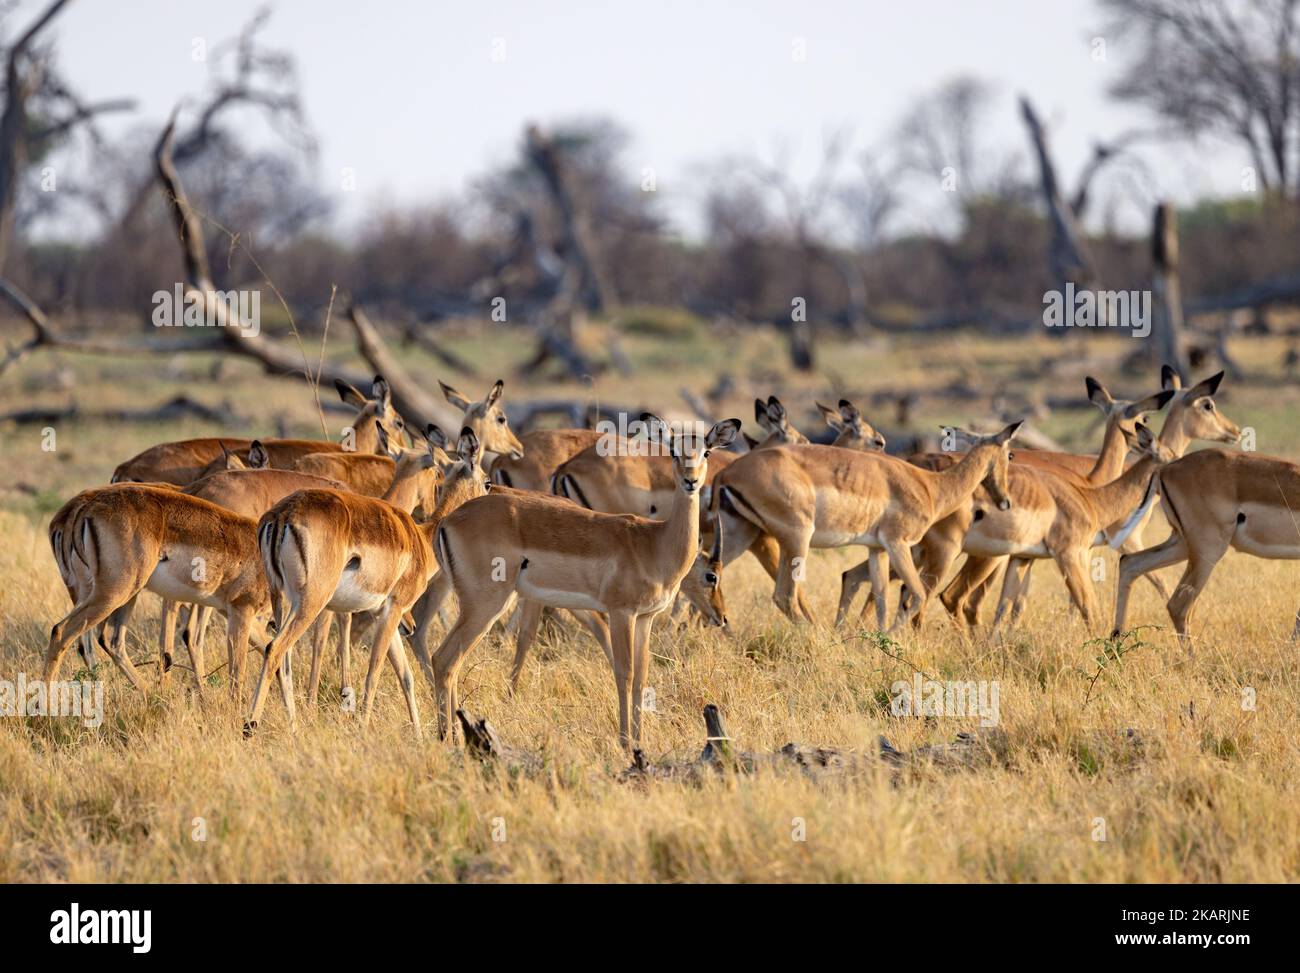 Common Impala herd; a herd of female impalas, Aepyceros melampus, aka Rooibok, grazing, Chobe National Park, Botswana Africa. Africa antelopes. Stock Photo